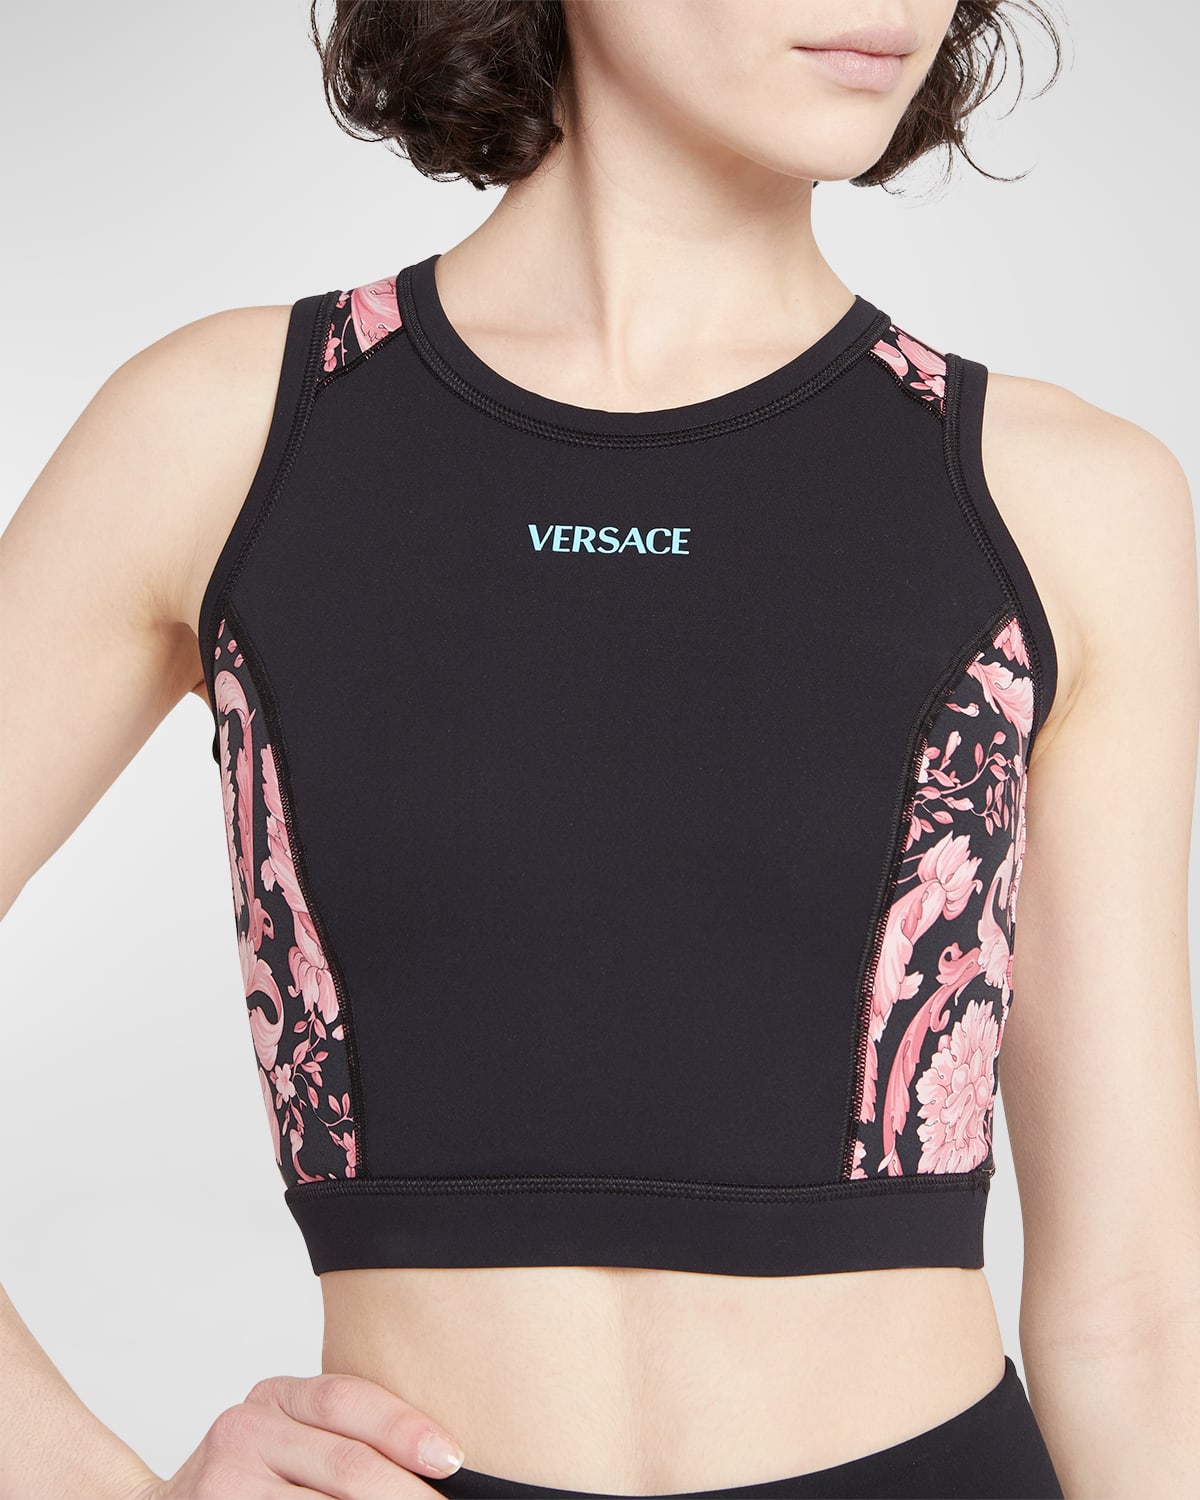 Versace Versace Sport Bra - Stylemyle